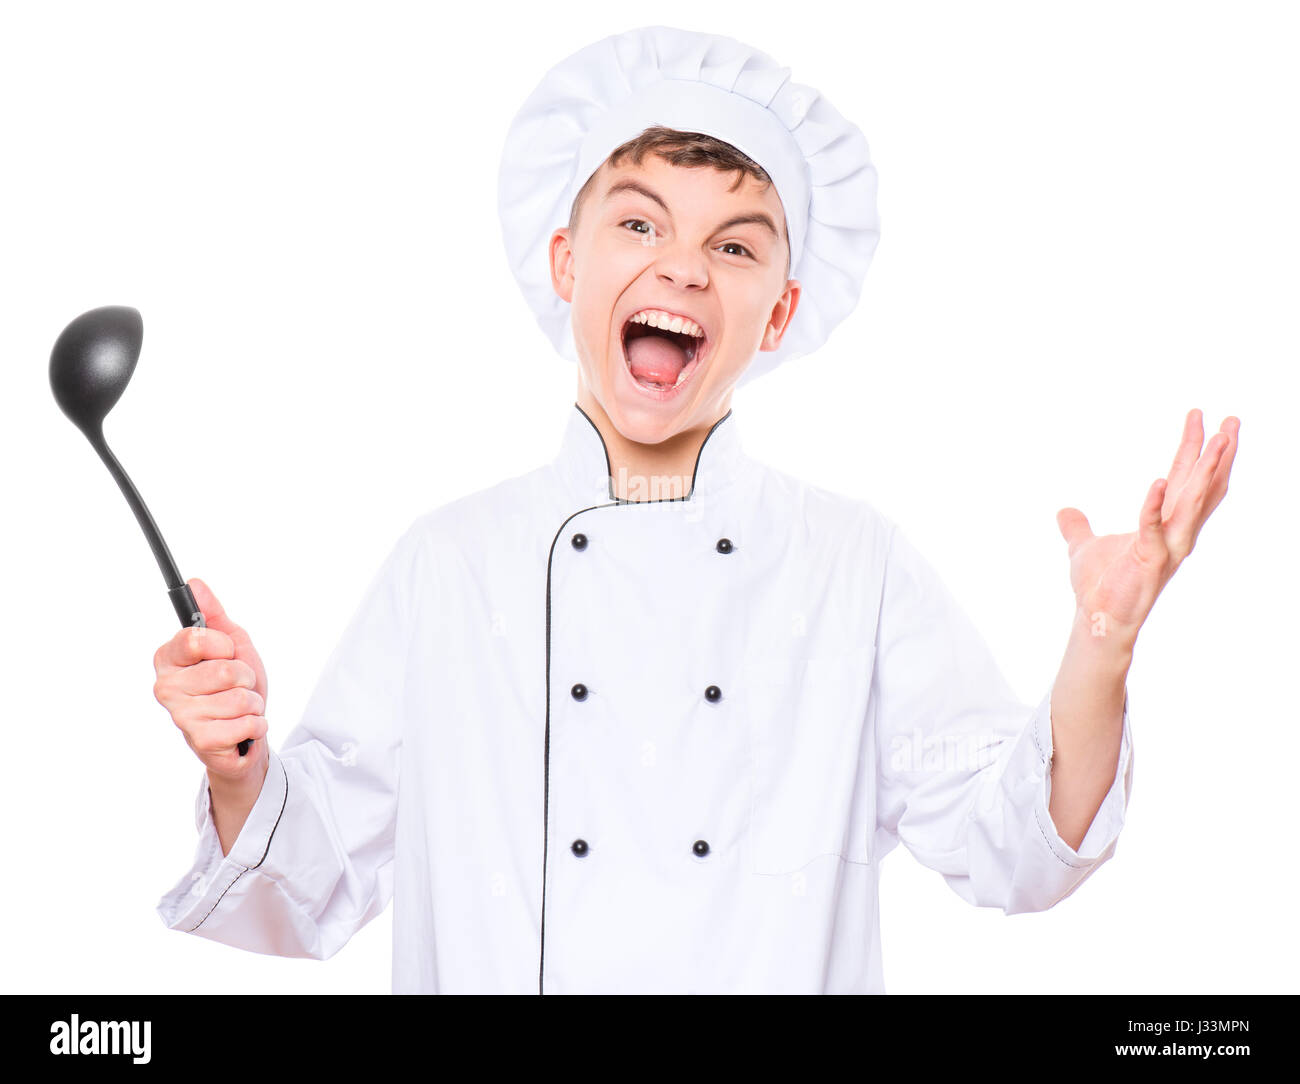 Teen boy wearing chef uniform Stock Photo